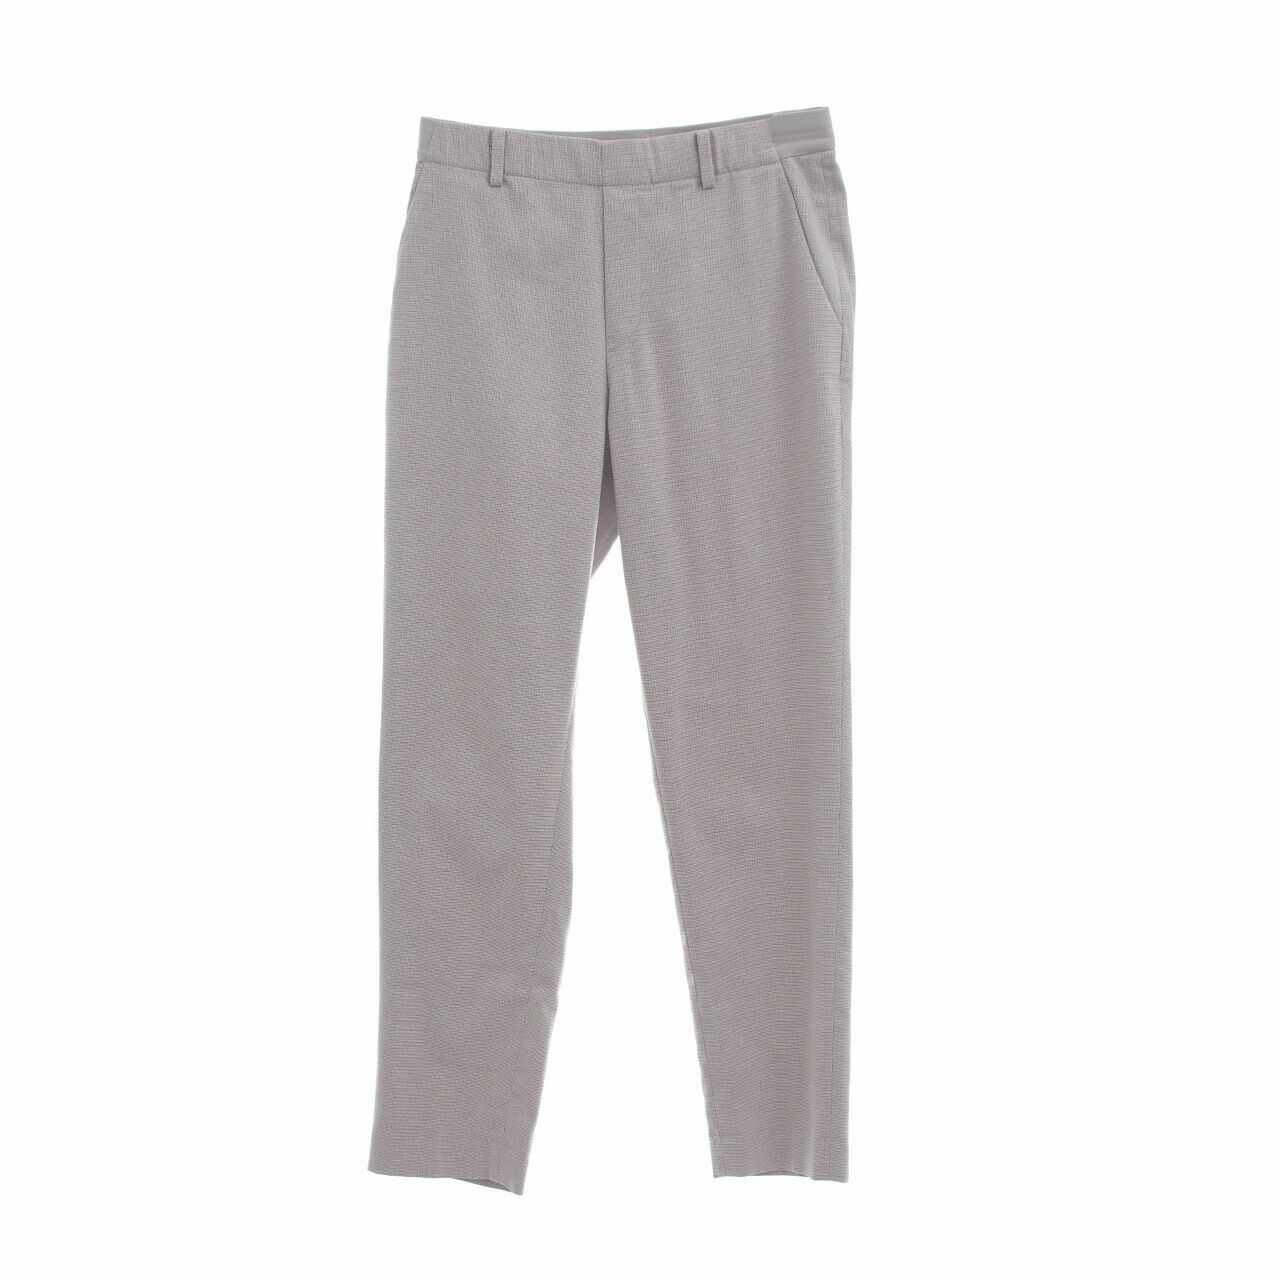 UNIQLO Grey & Multi Long Pants